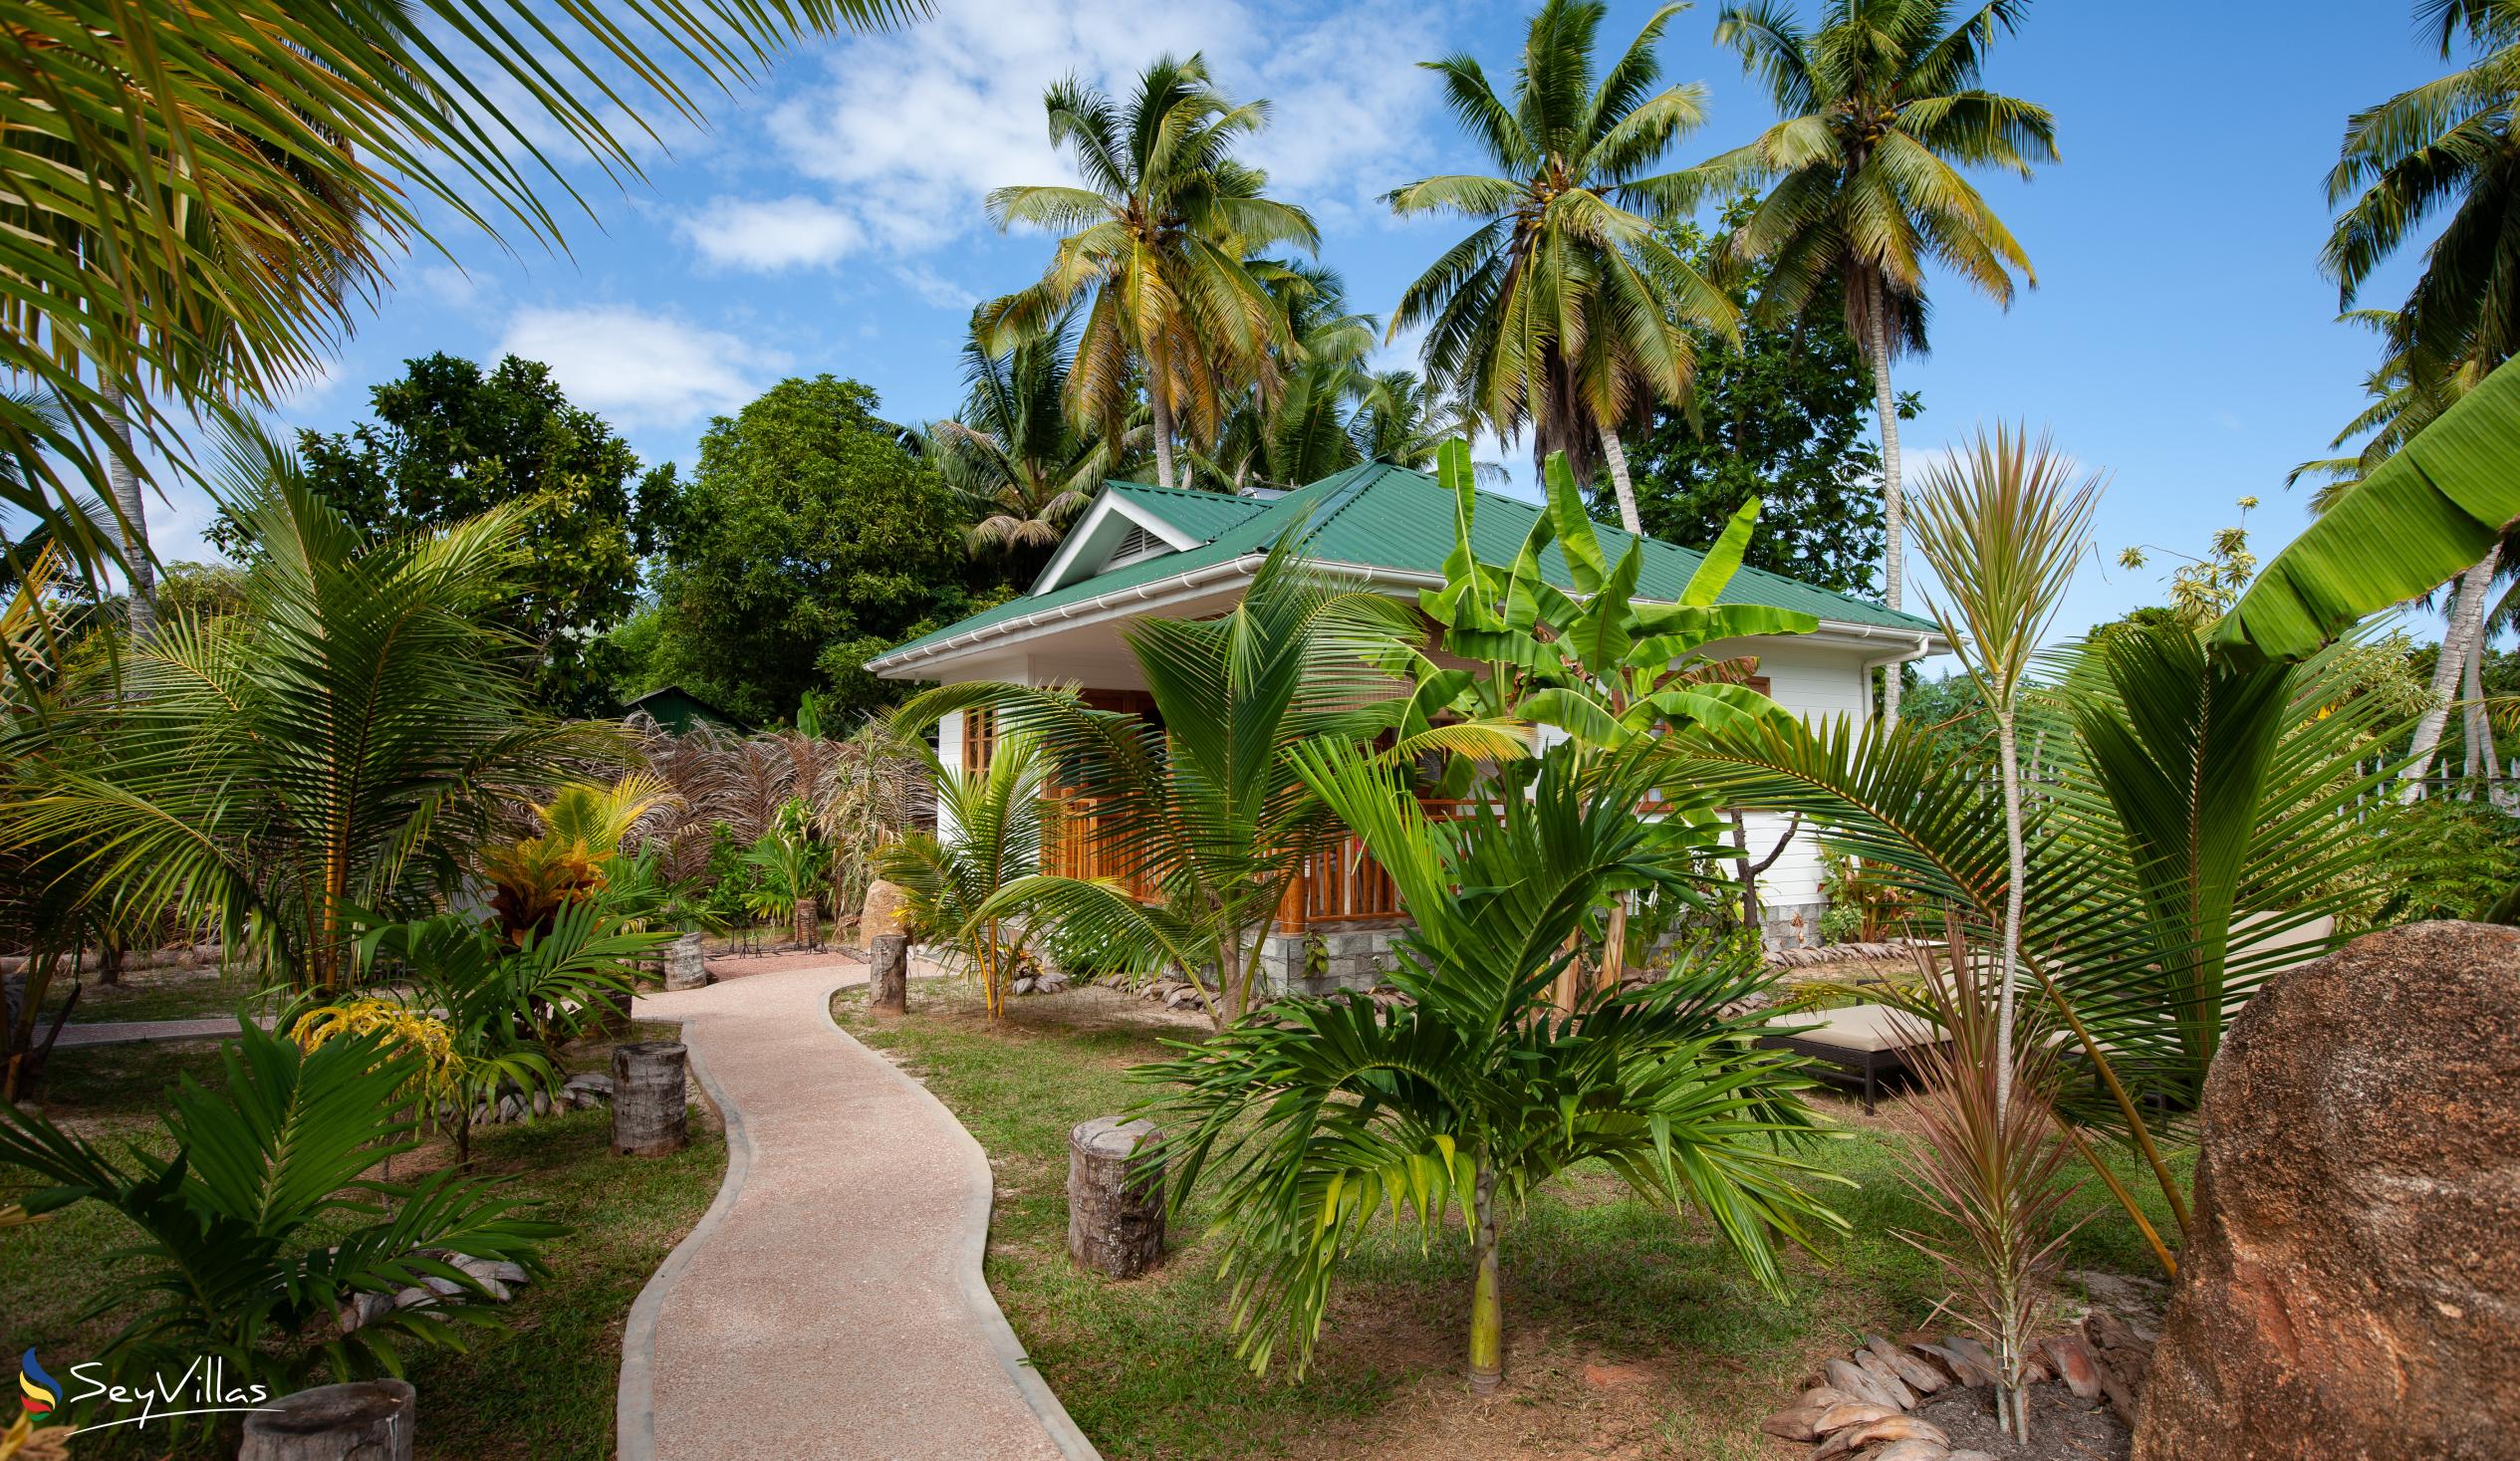 Foto 19: Coco de Mahi - Aussenbereich - La Digue (Seychellen)